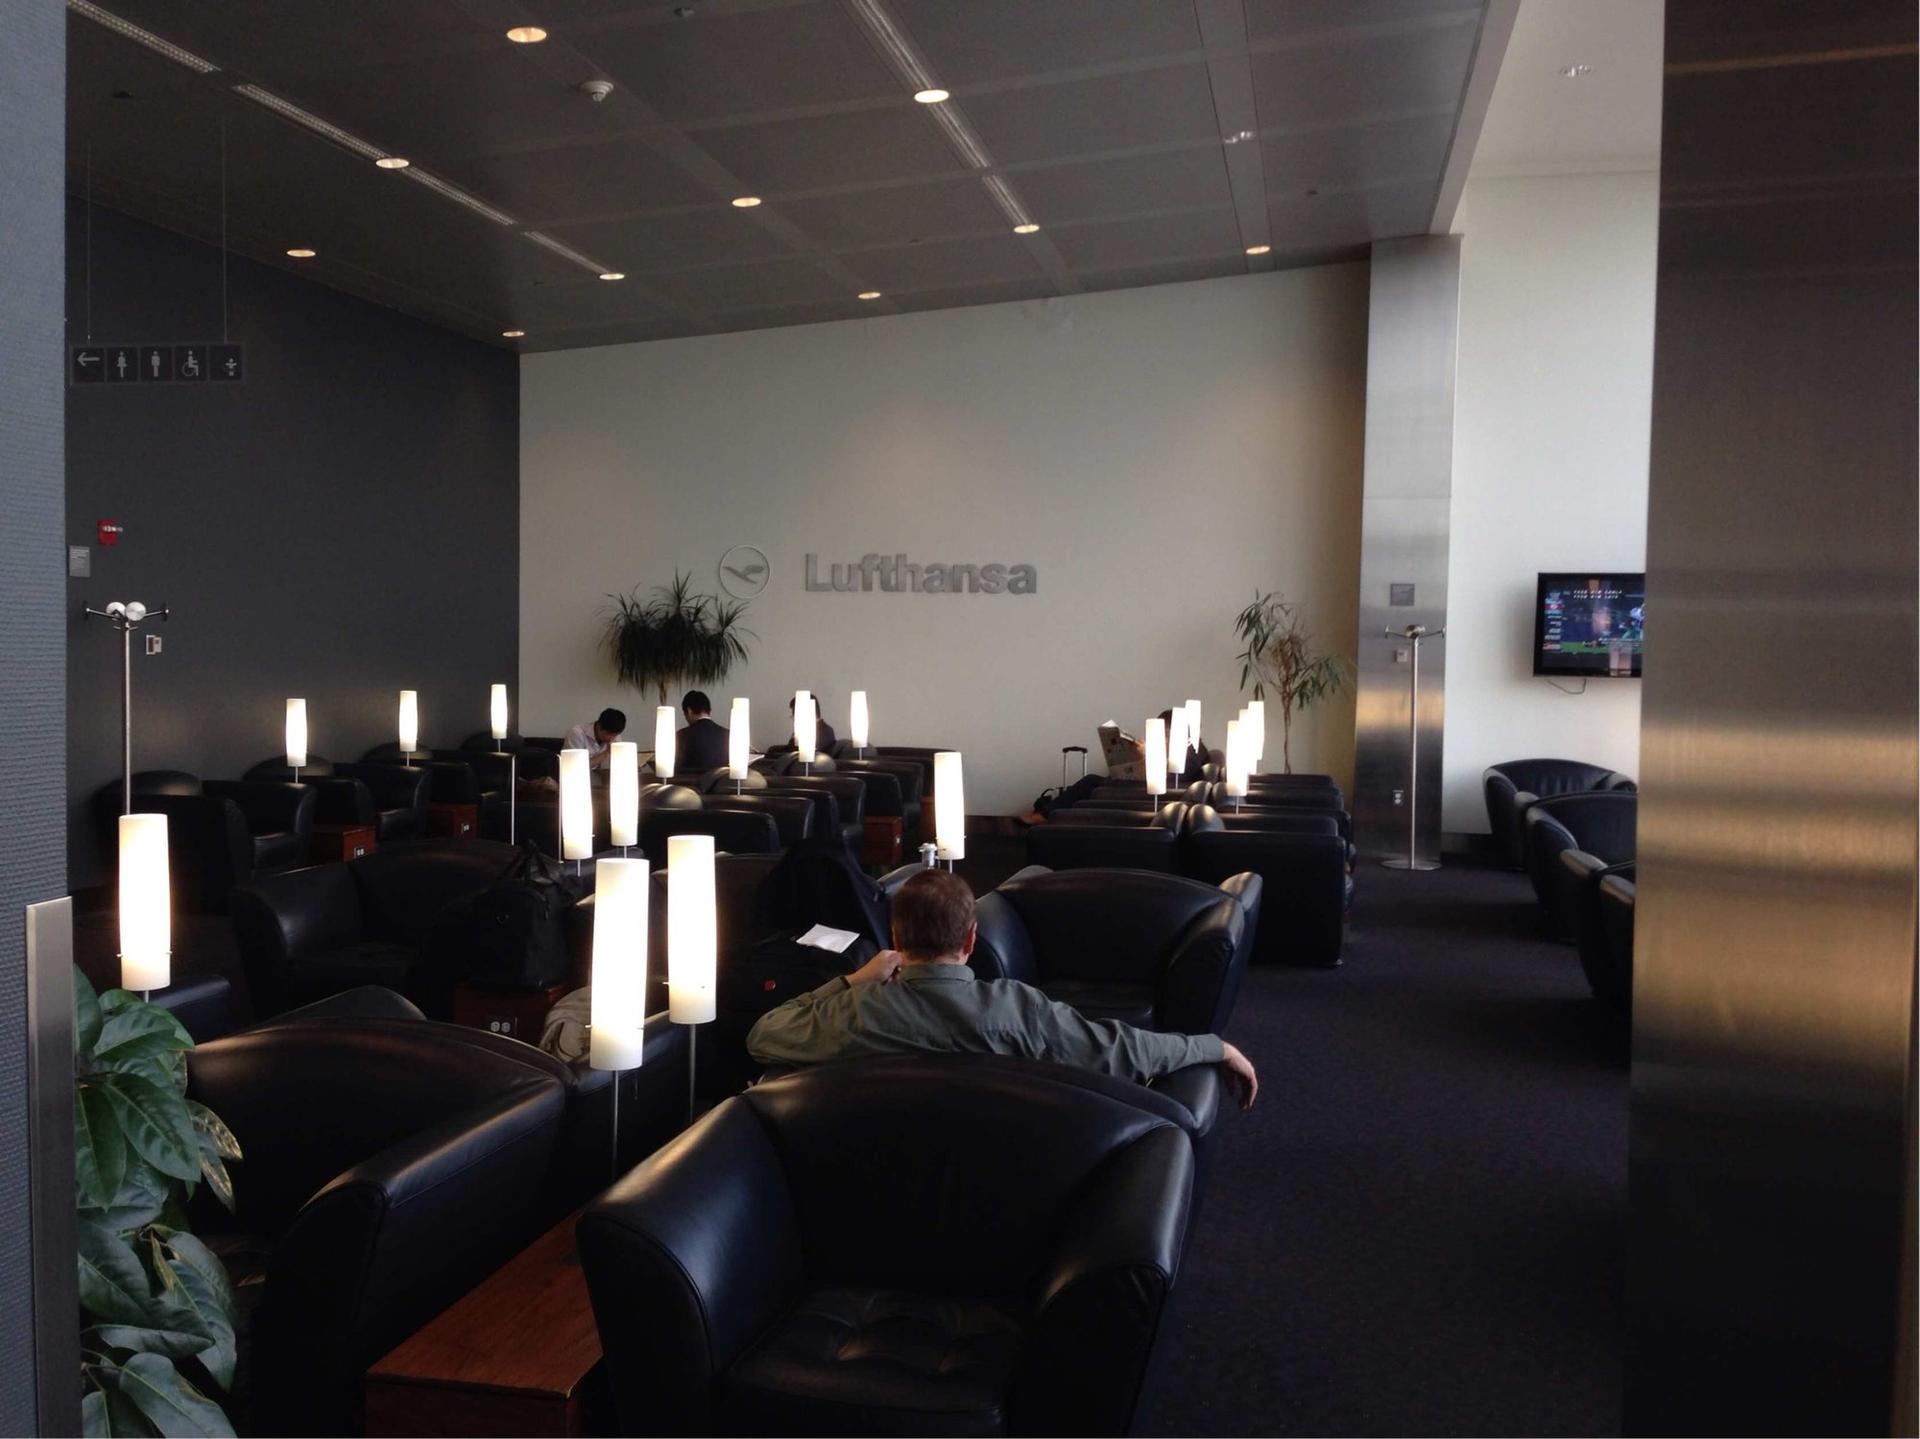 Lufthansa Senator Lounge  image 8 of 32